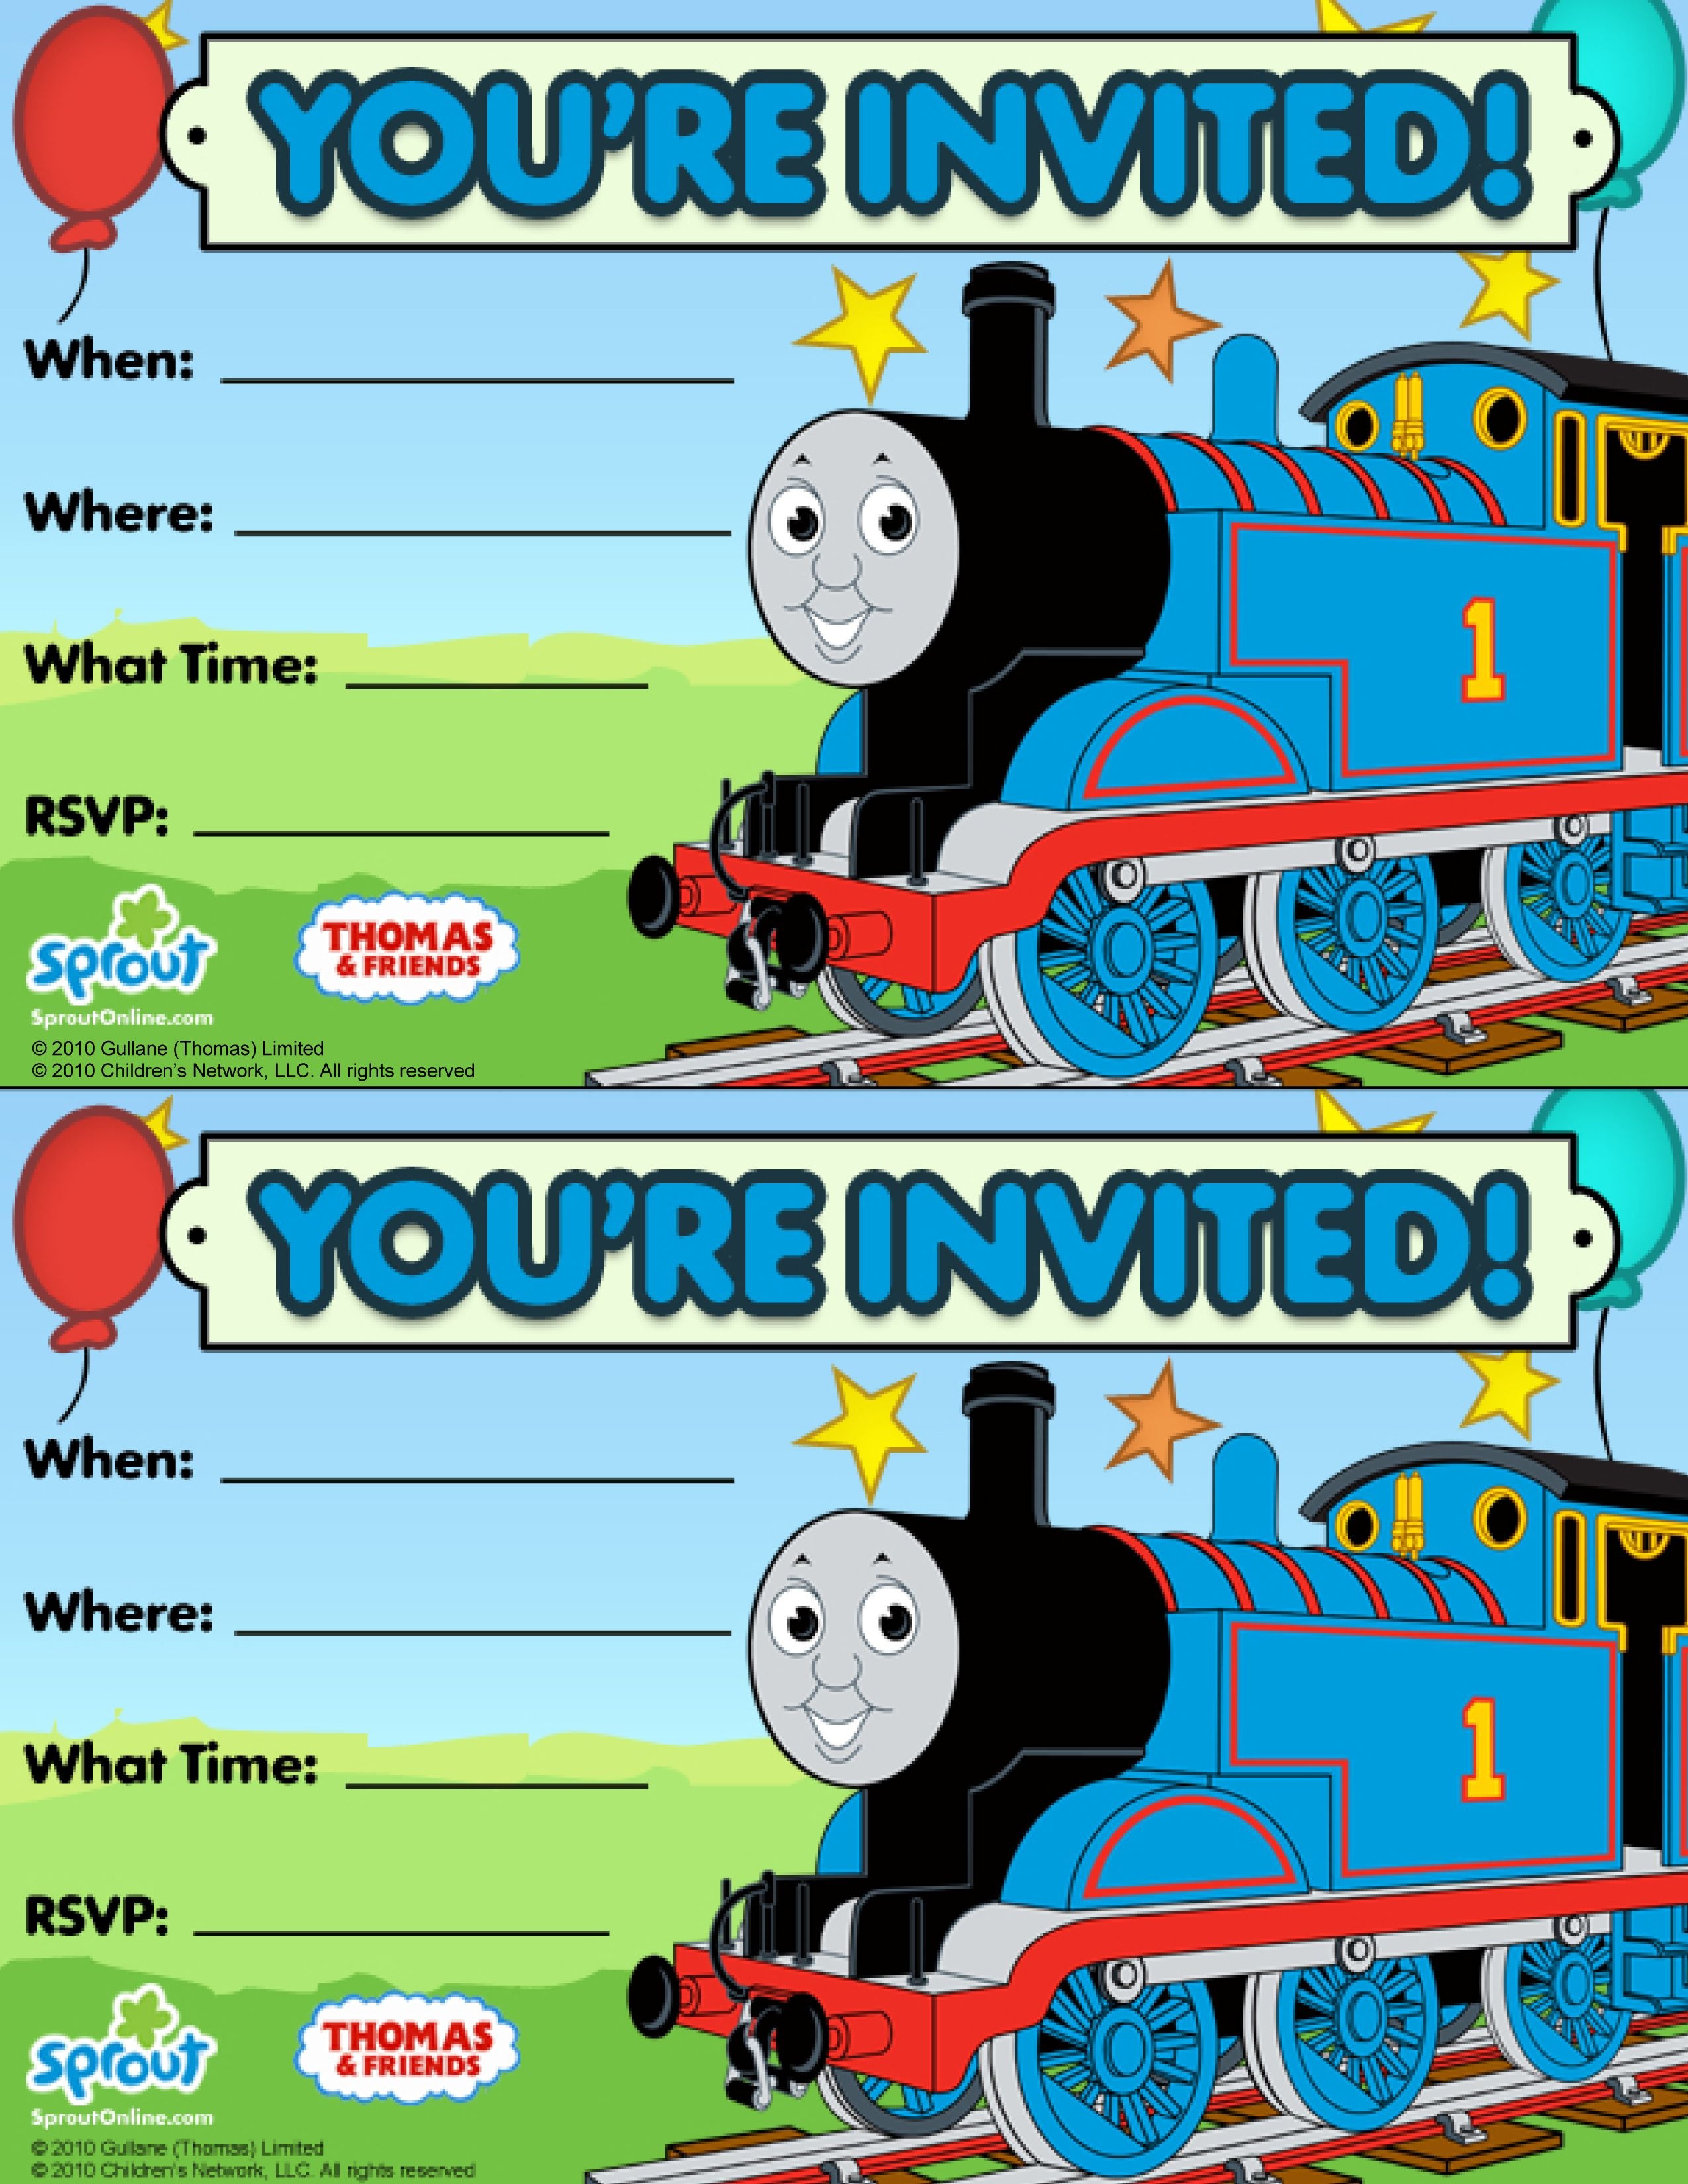 Thomas &amp; Friends Party Invitation: Free | Birthday Party Ideas - Thomas Invitations Printable Free